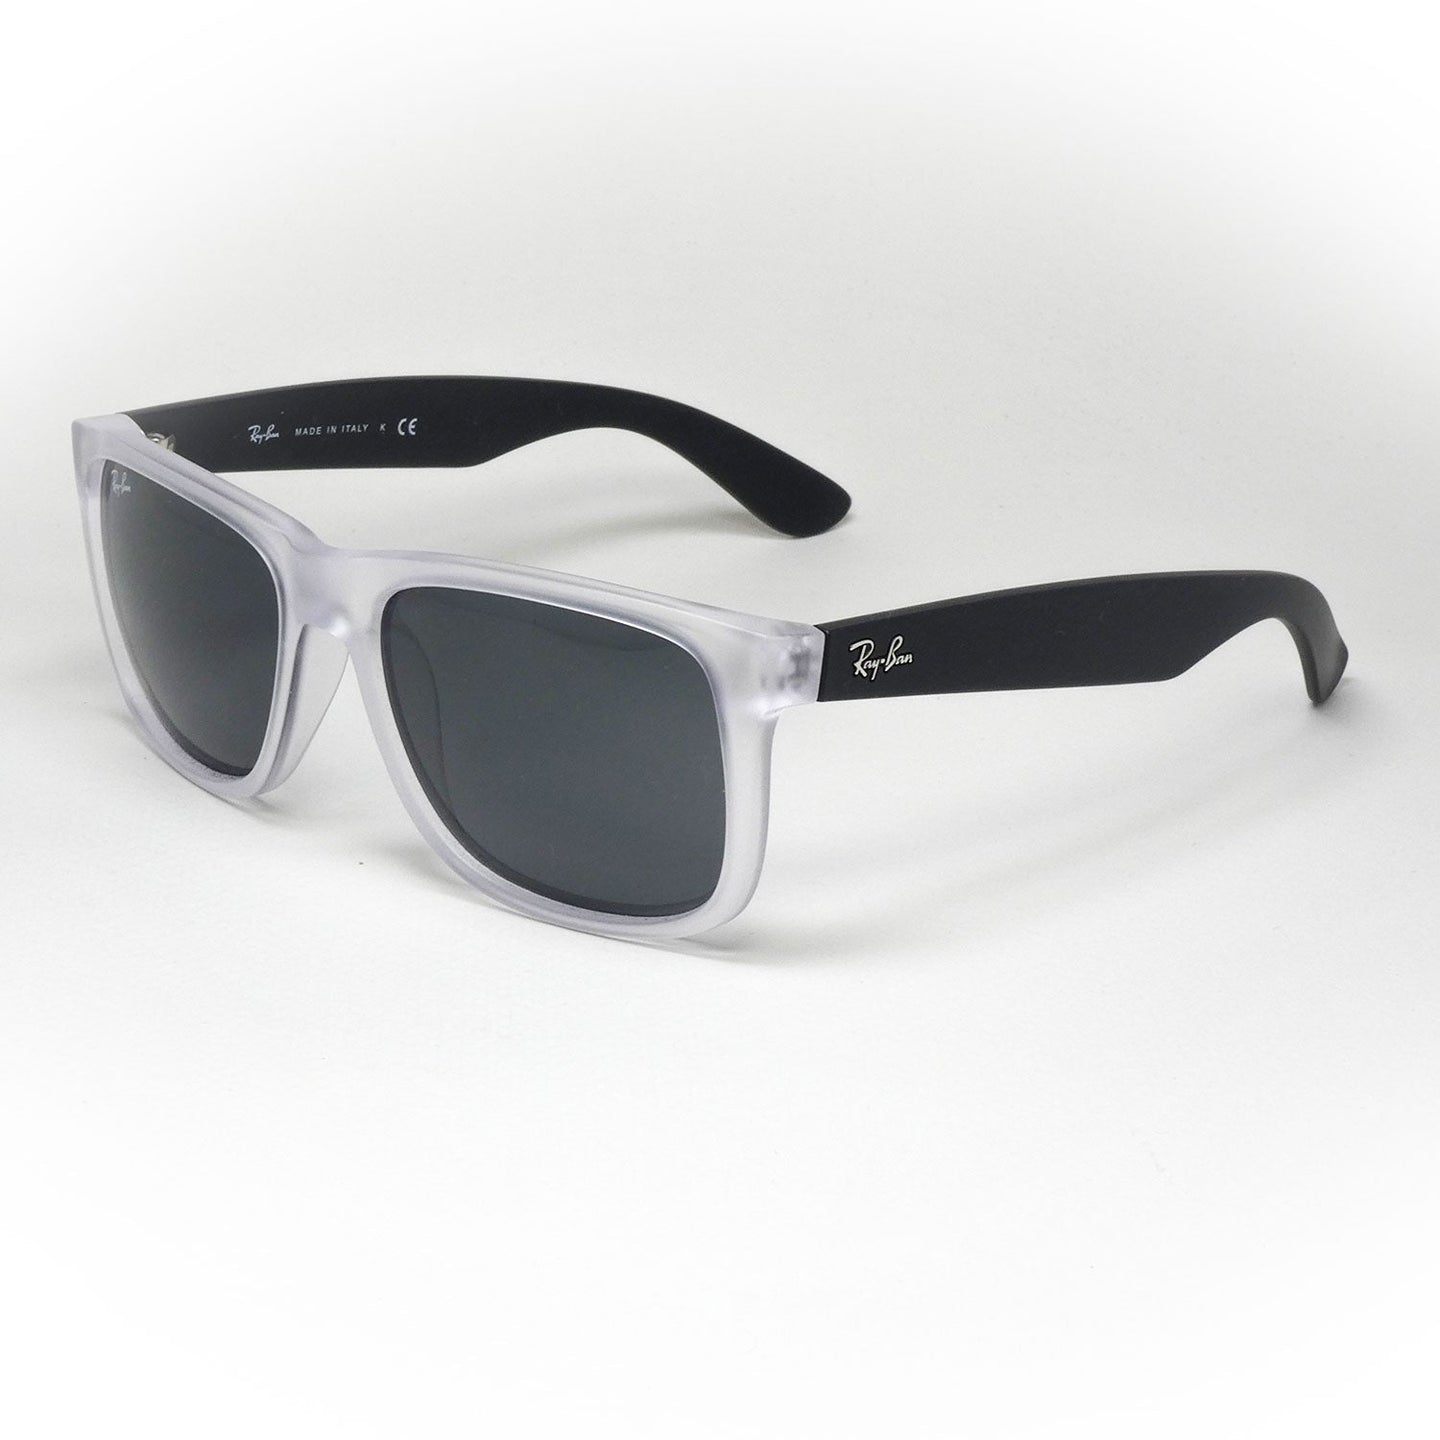 sunglasses rayban model rb4165 color 6512/87